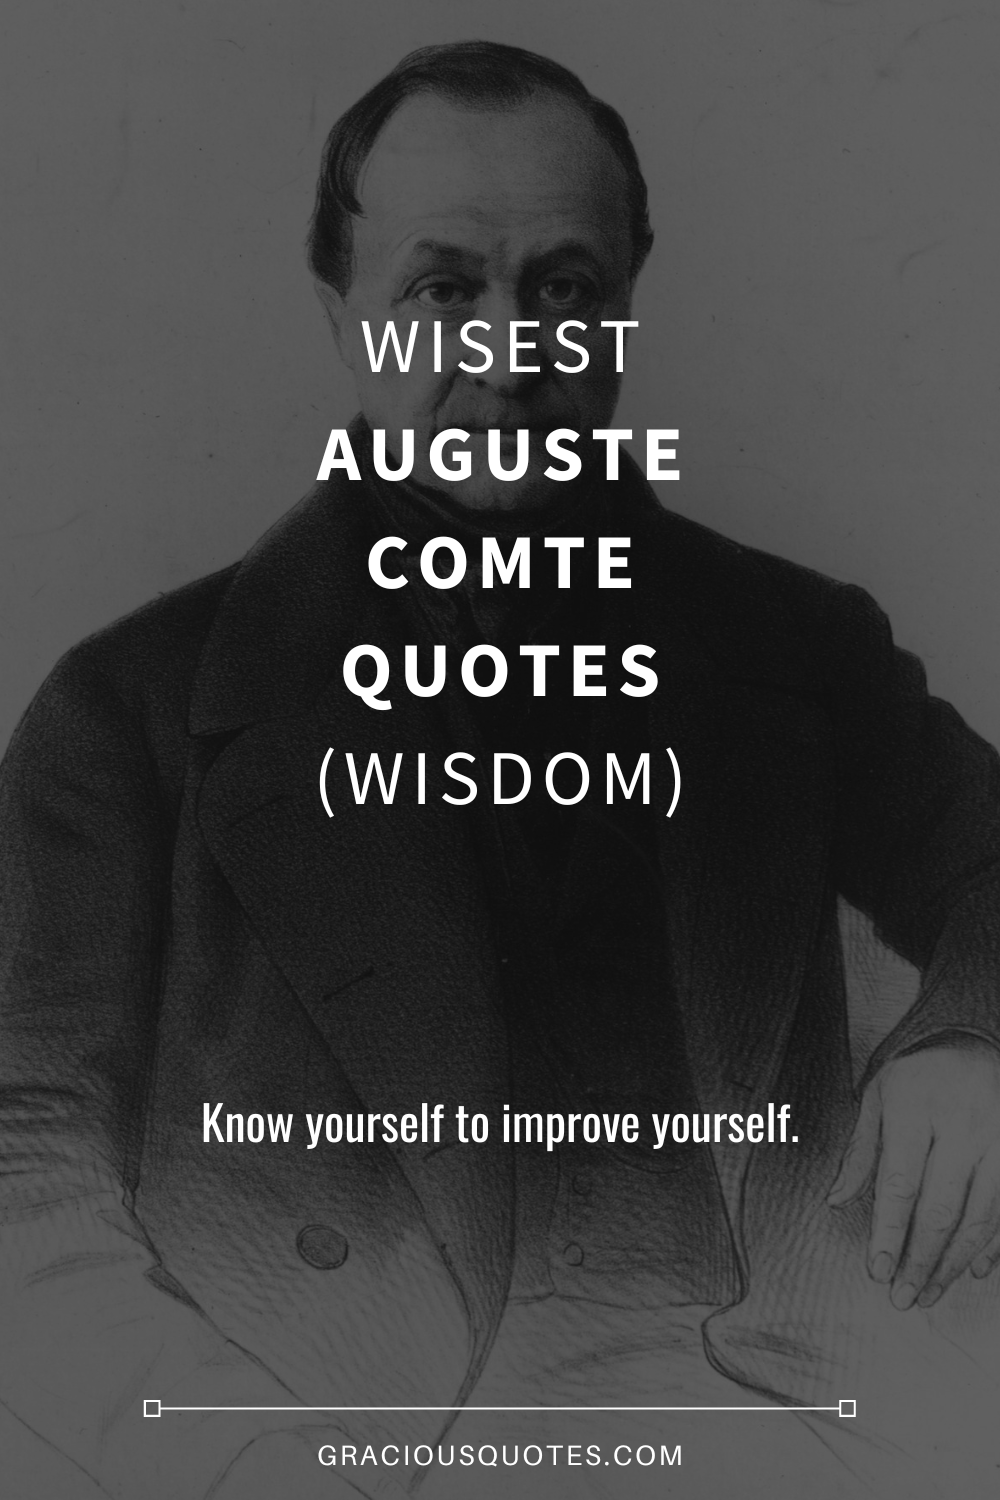 Wisest Auguste Comte Quotes (WISDOM) - Gracious Quotes